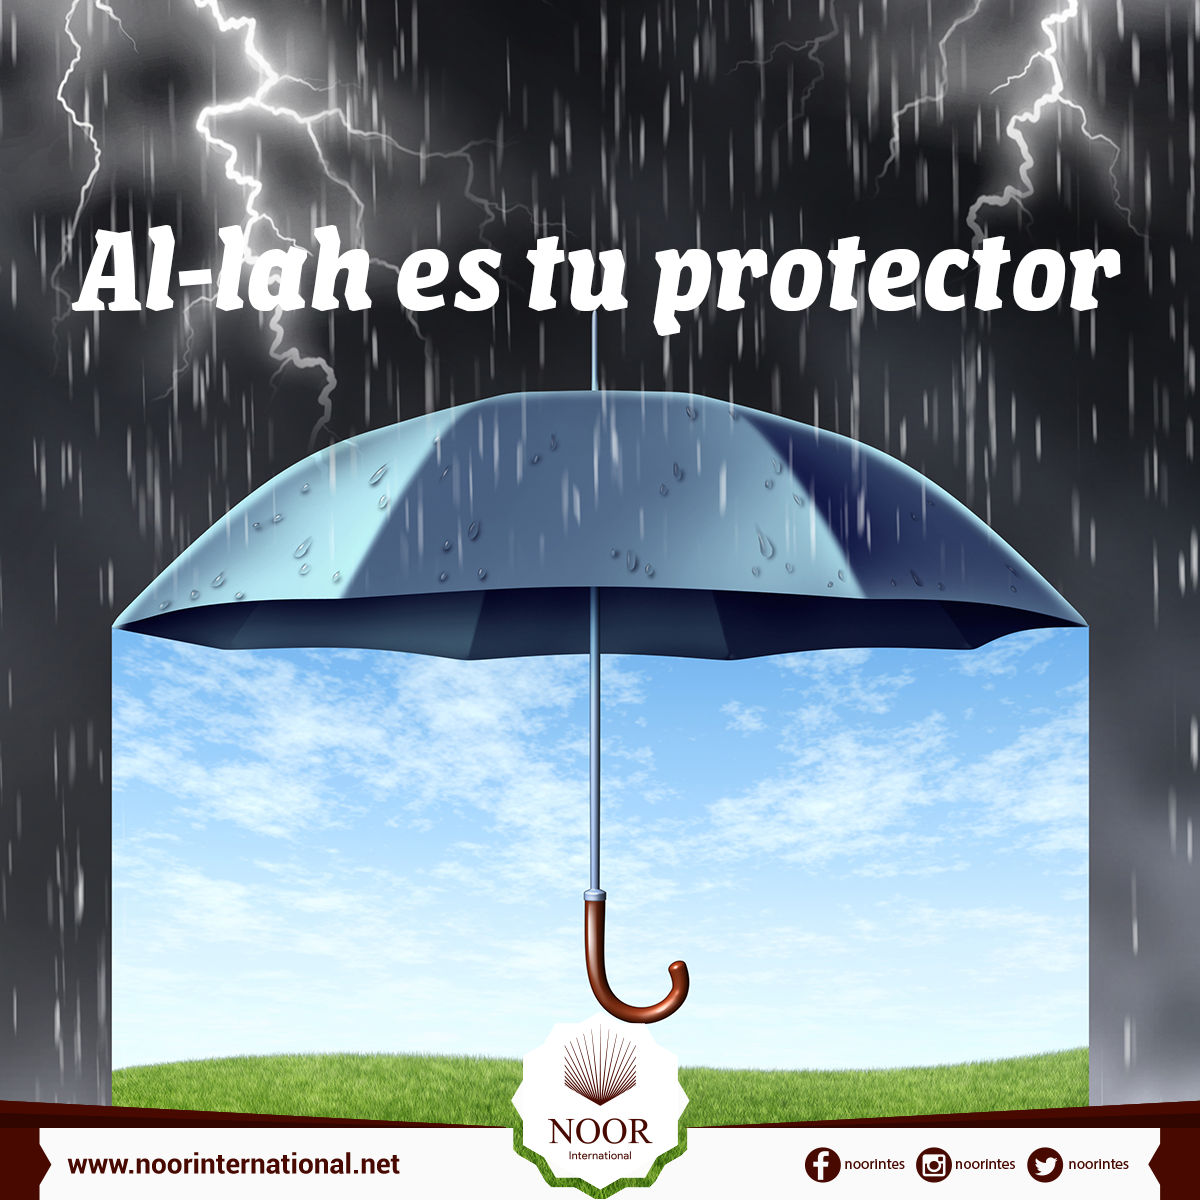 Al-lah es tu protector